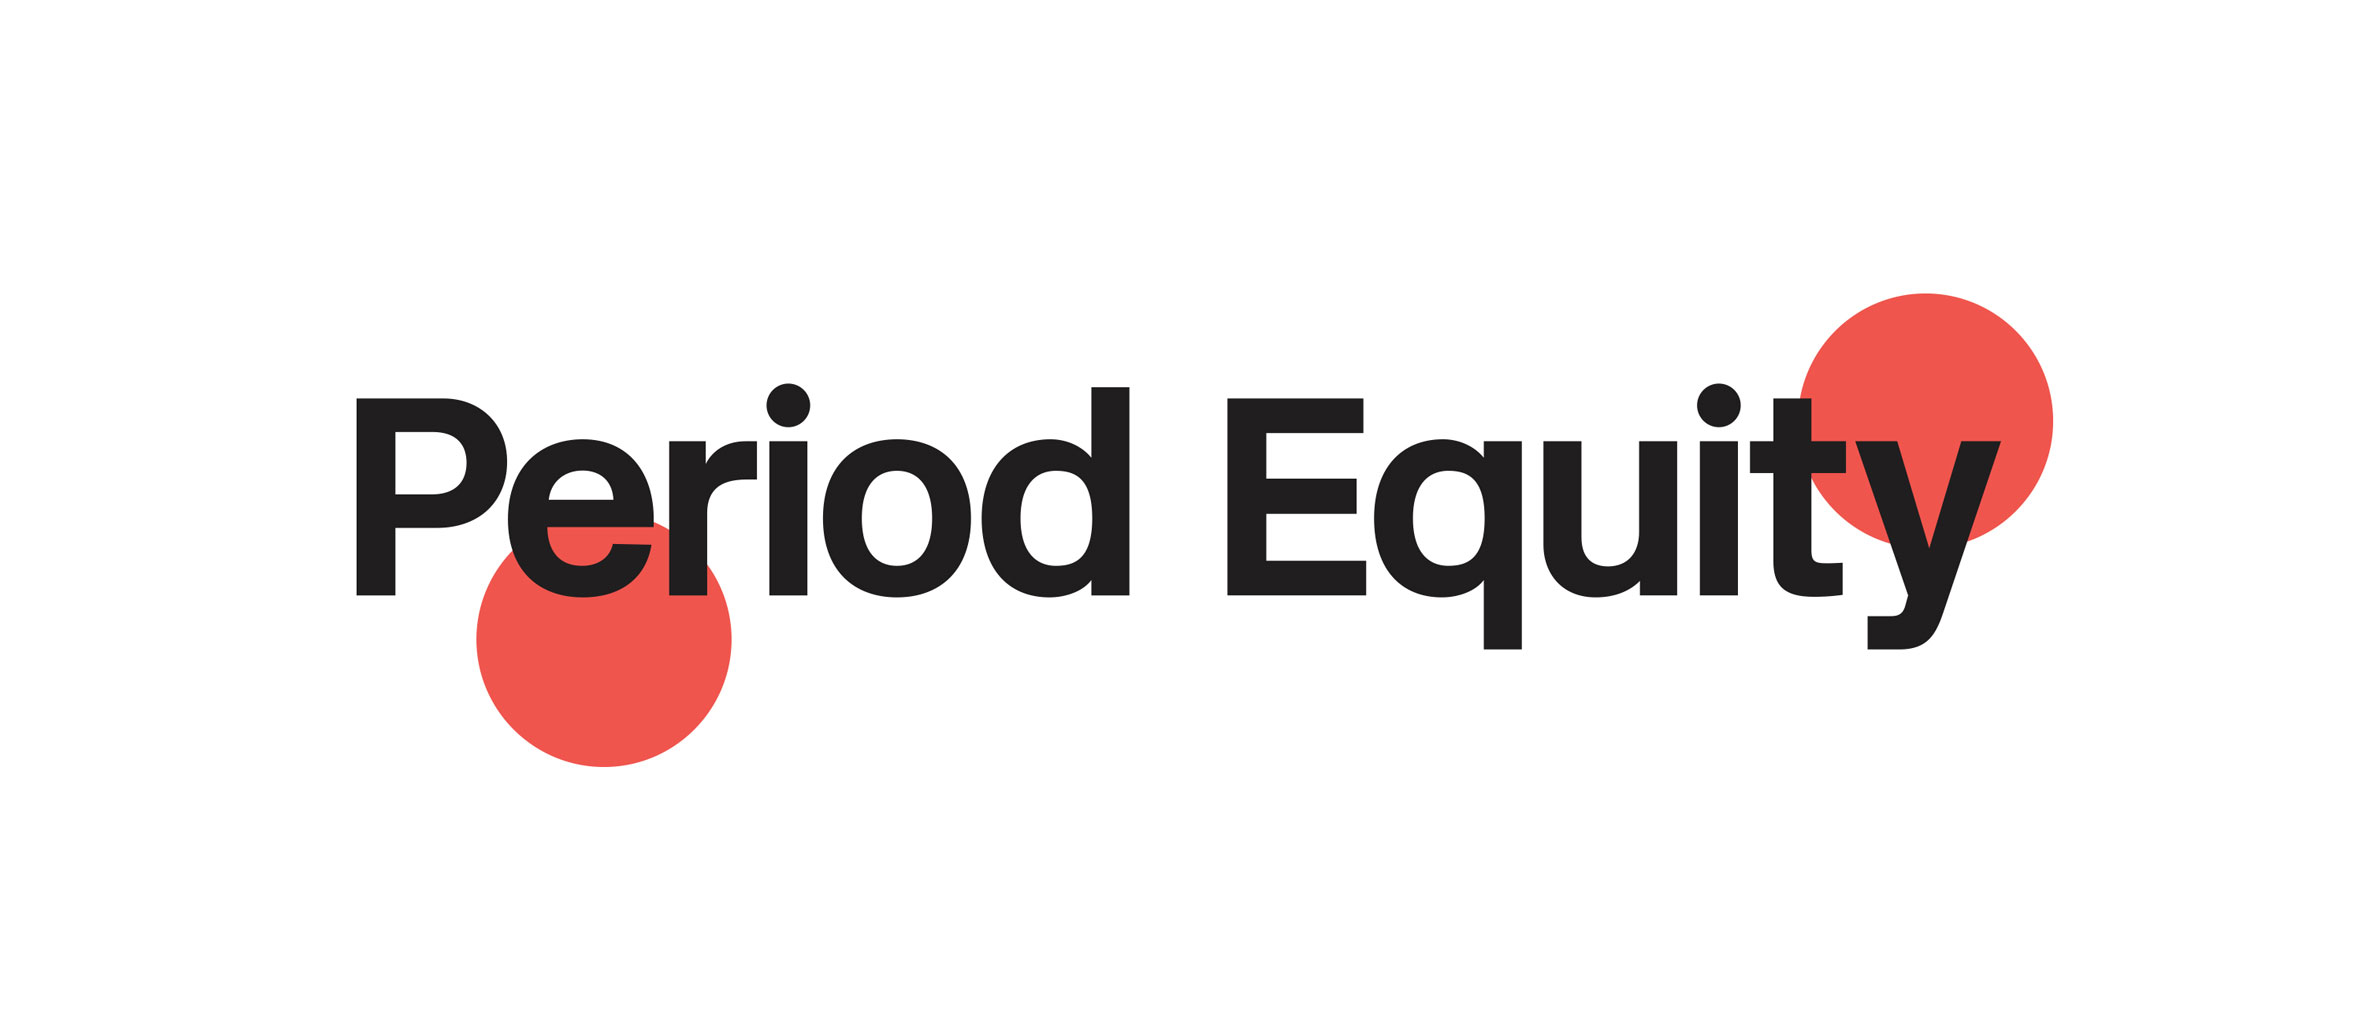 Period Equity branding by Pentagram and Paula Scher